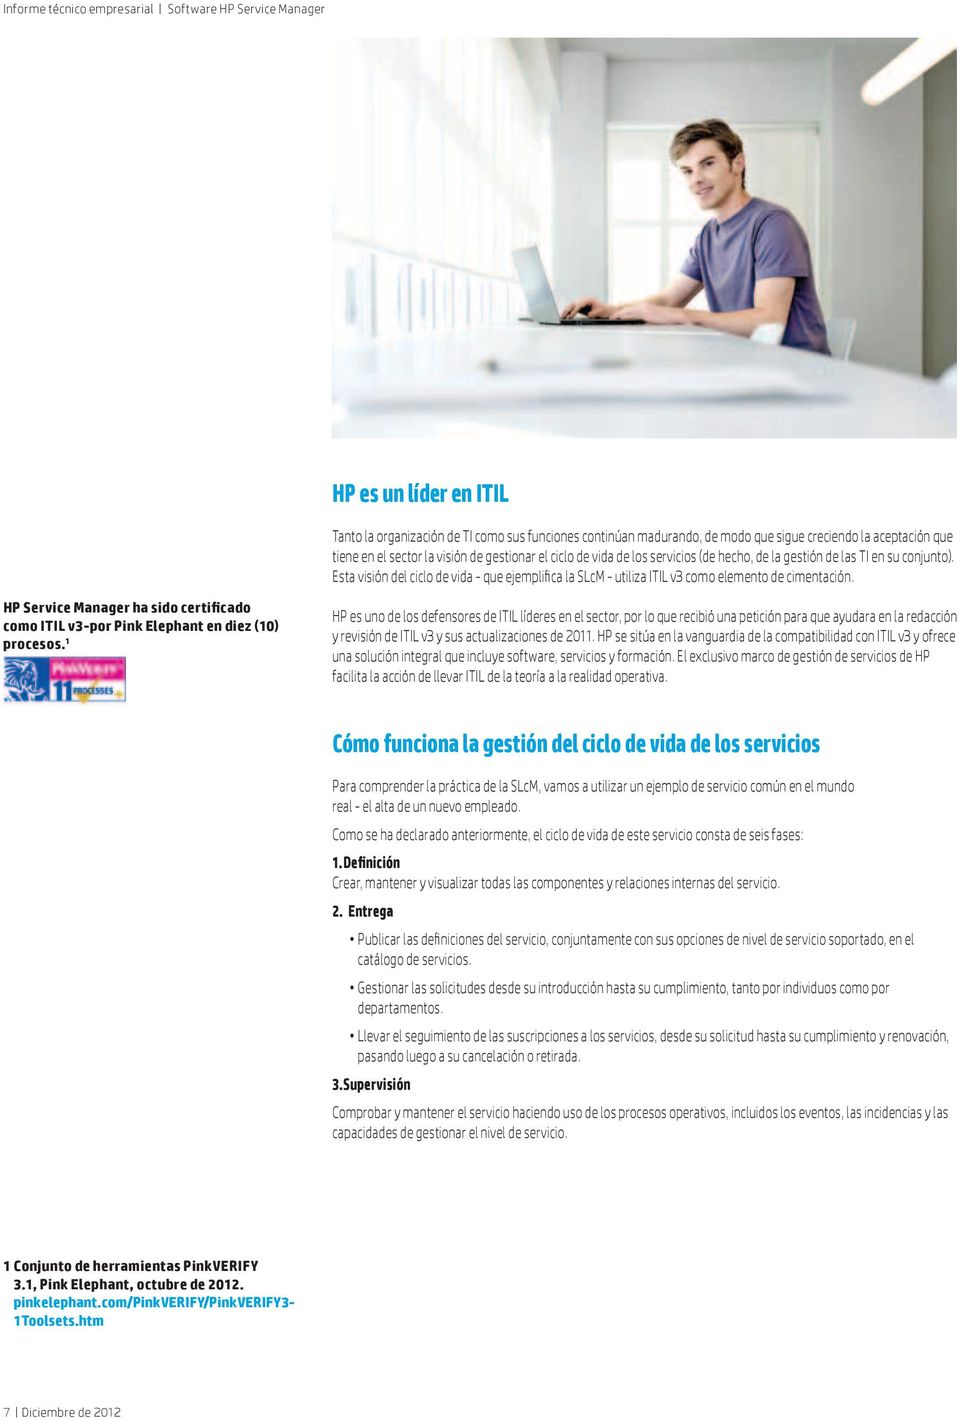 HP Service Manager ha sido certificado como ITIL v3 por Pink Elephant en diez (10) procesos.